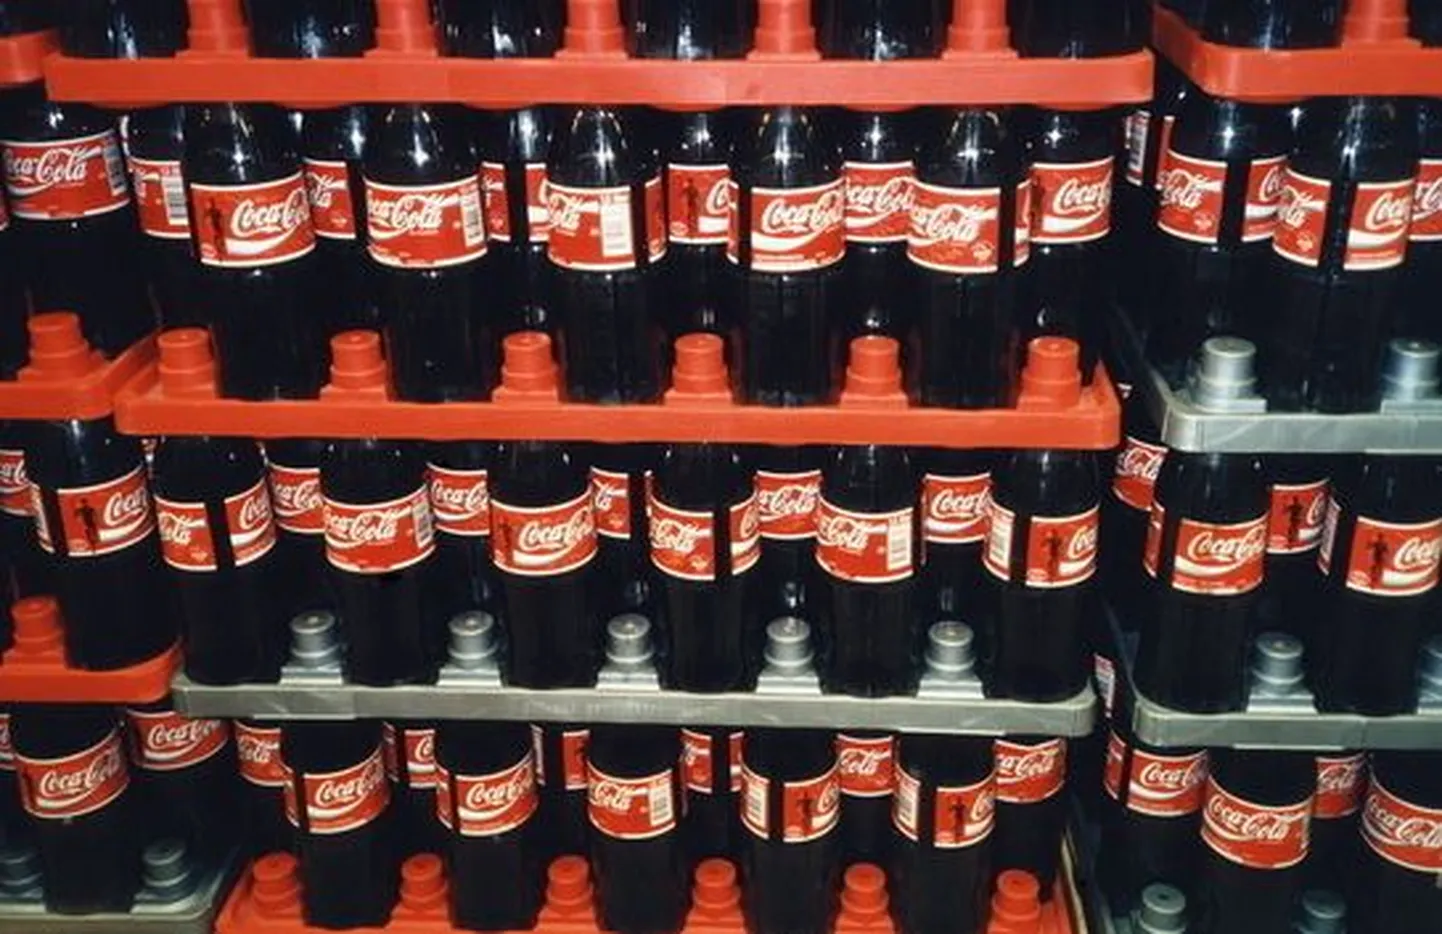 Pildil Coca-Cola pudelid